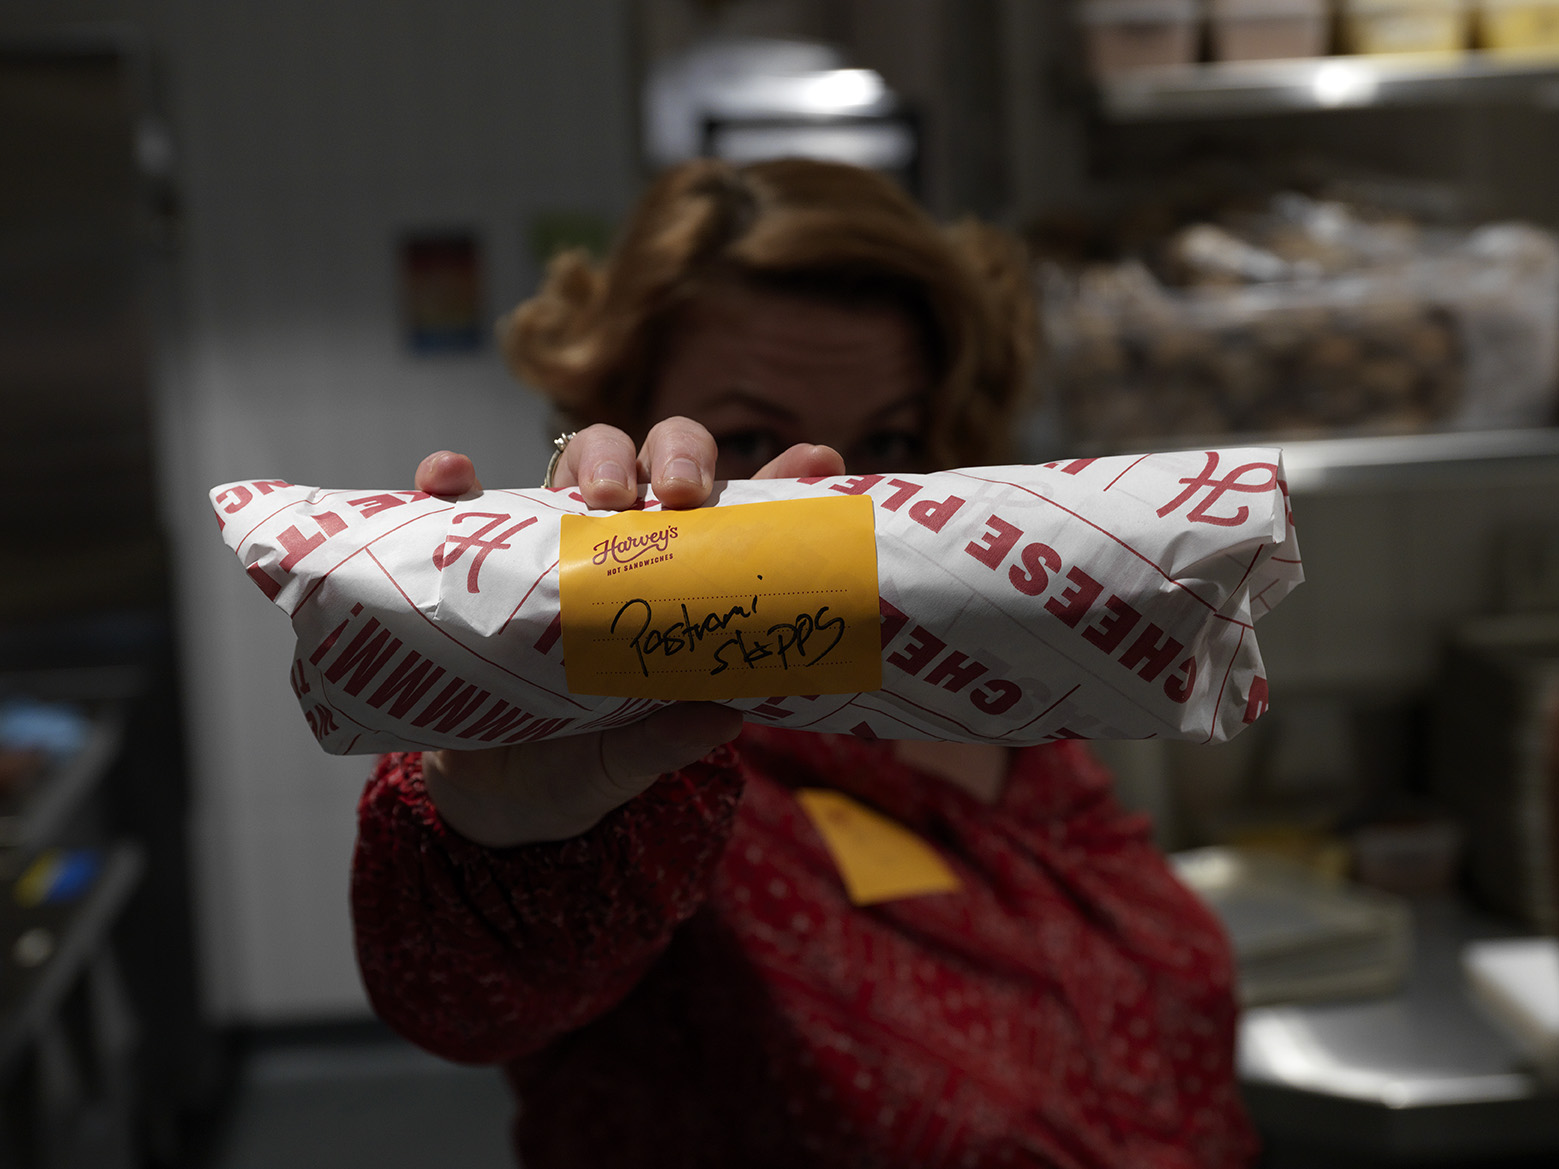 That’s a wrap. Harvey’s Hot Sandwiches - where sandwich dreams come true.